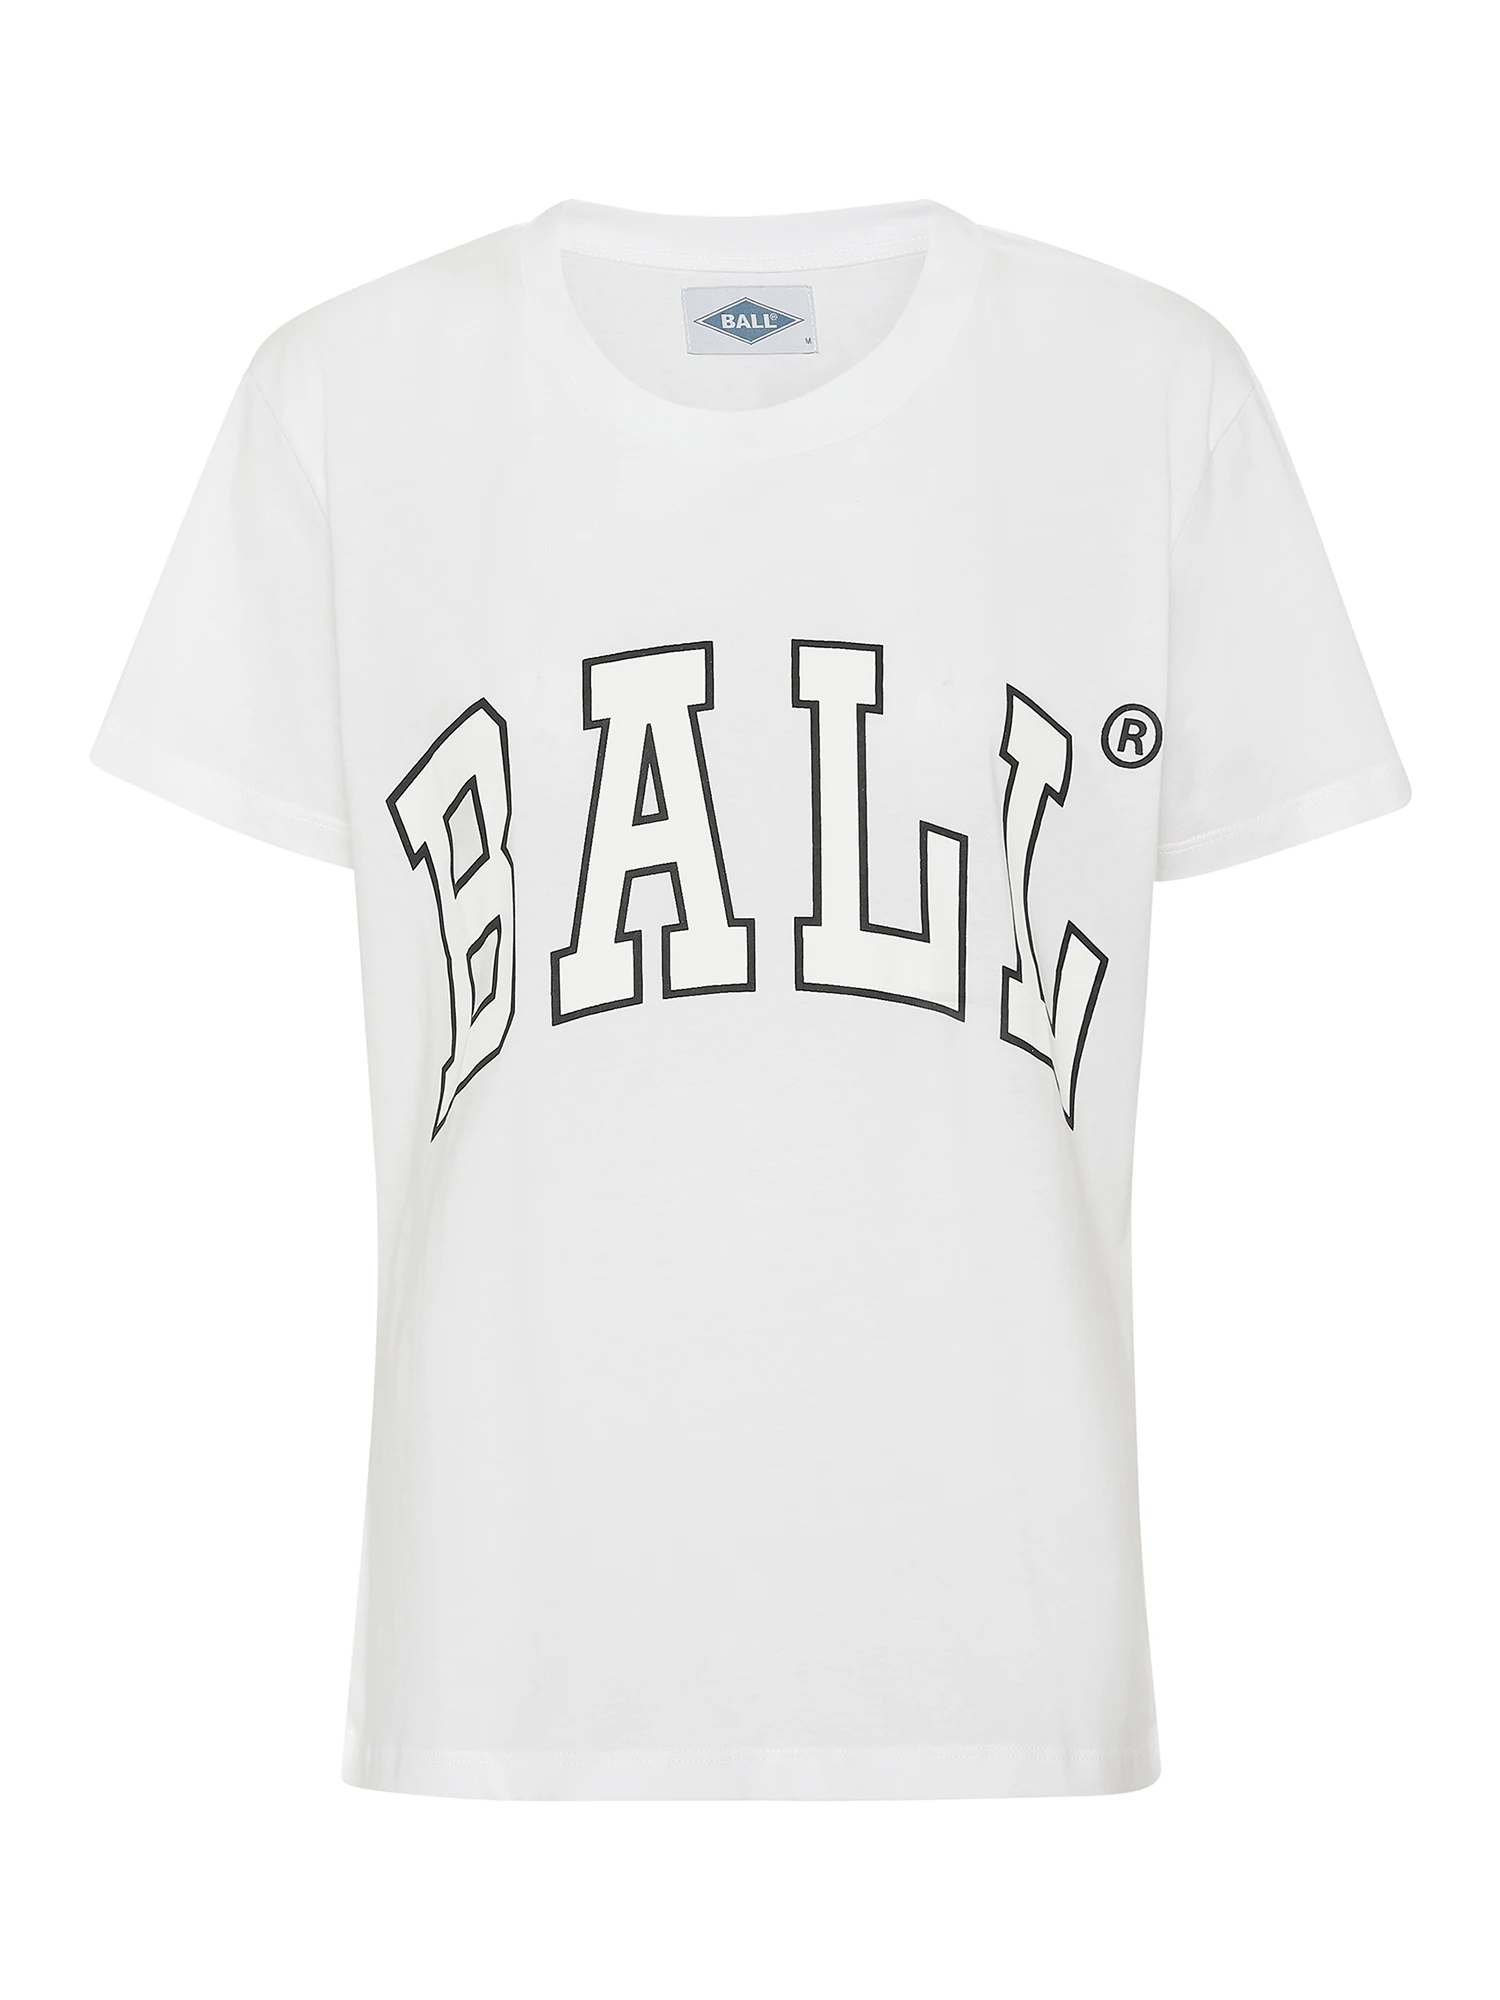 Ball R. David T-Shirt Bright White | Find din Ball t-shirt her